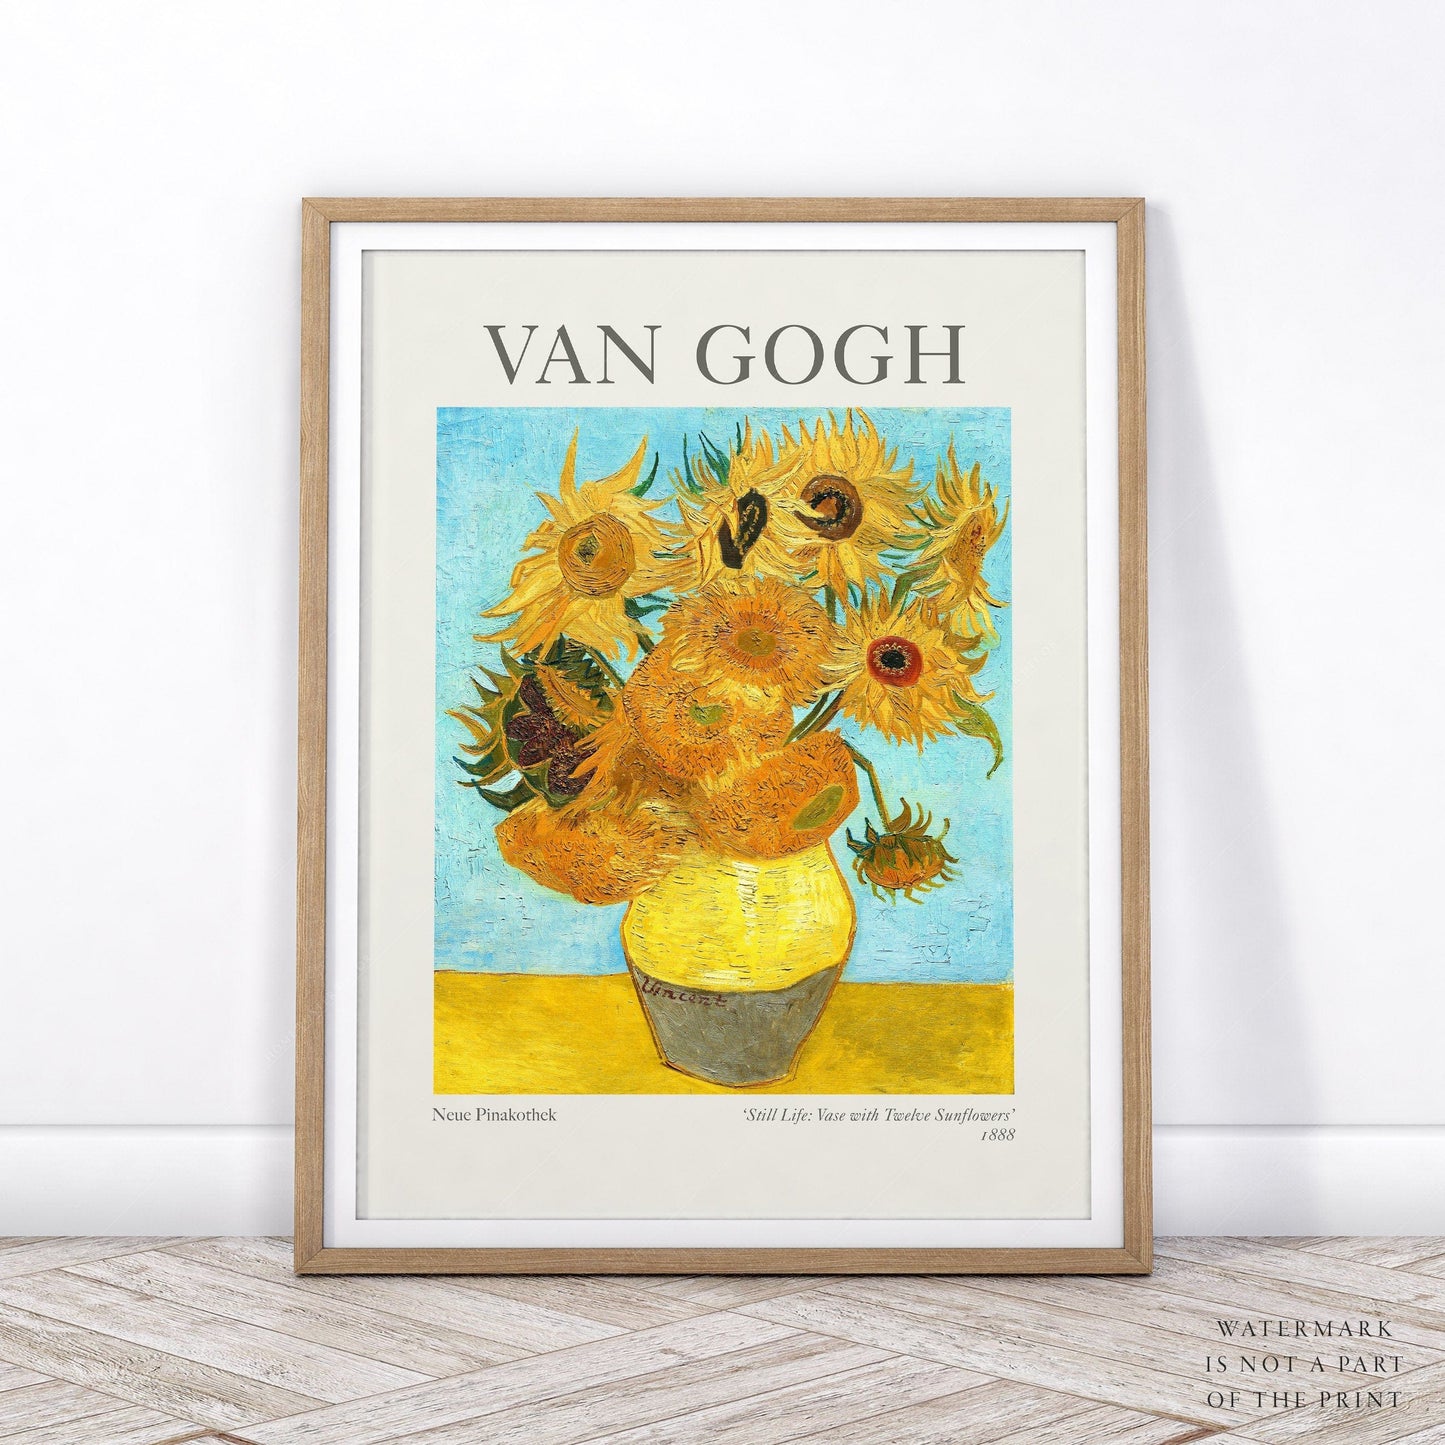 Home Poster Decor Van Gogh Sunflower, Van Gogh Prints, Floral Wall Art, Van Gogh Exhibition, Van Gogh Flowers, Still Life, Vase with Twelve sunflowers